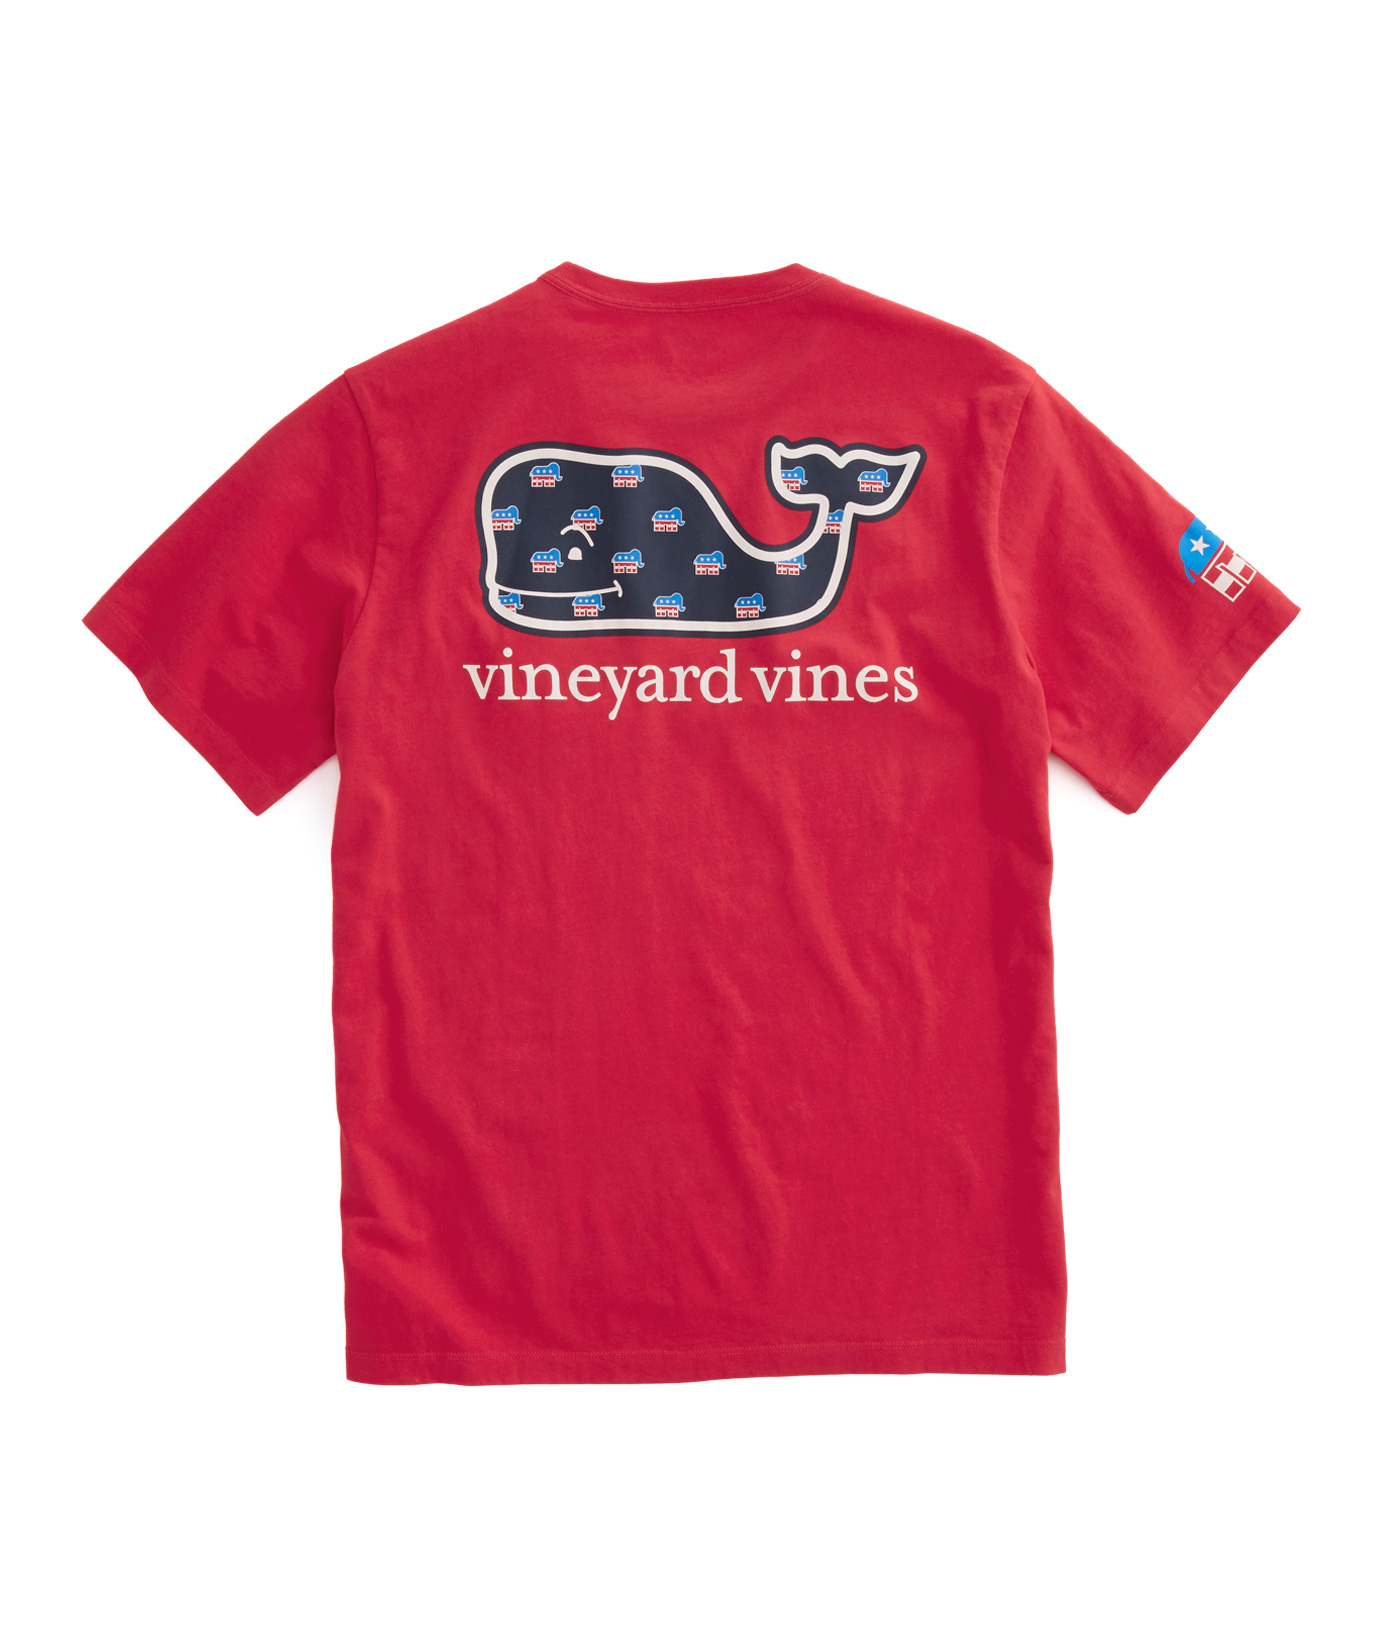 New York Red Bulls Vineyard Vines Whale Scarf T-Shirt - Red